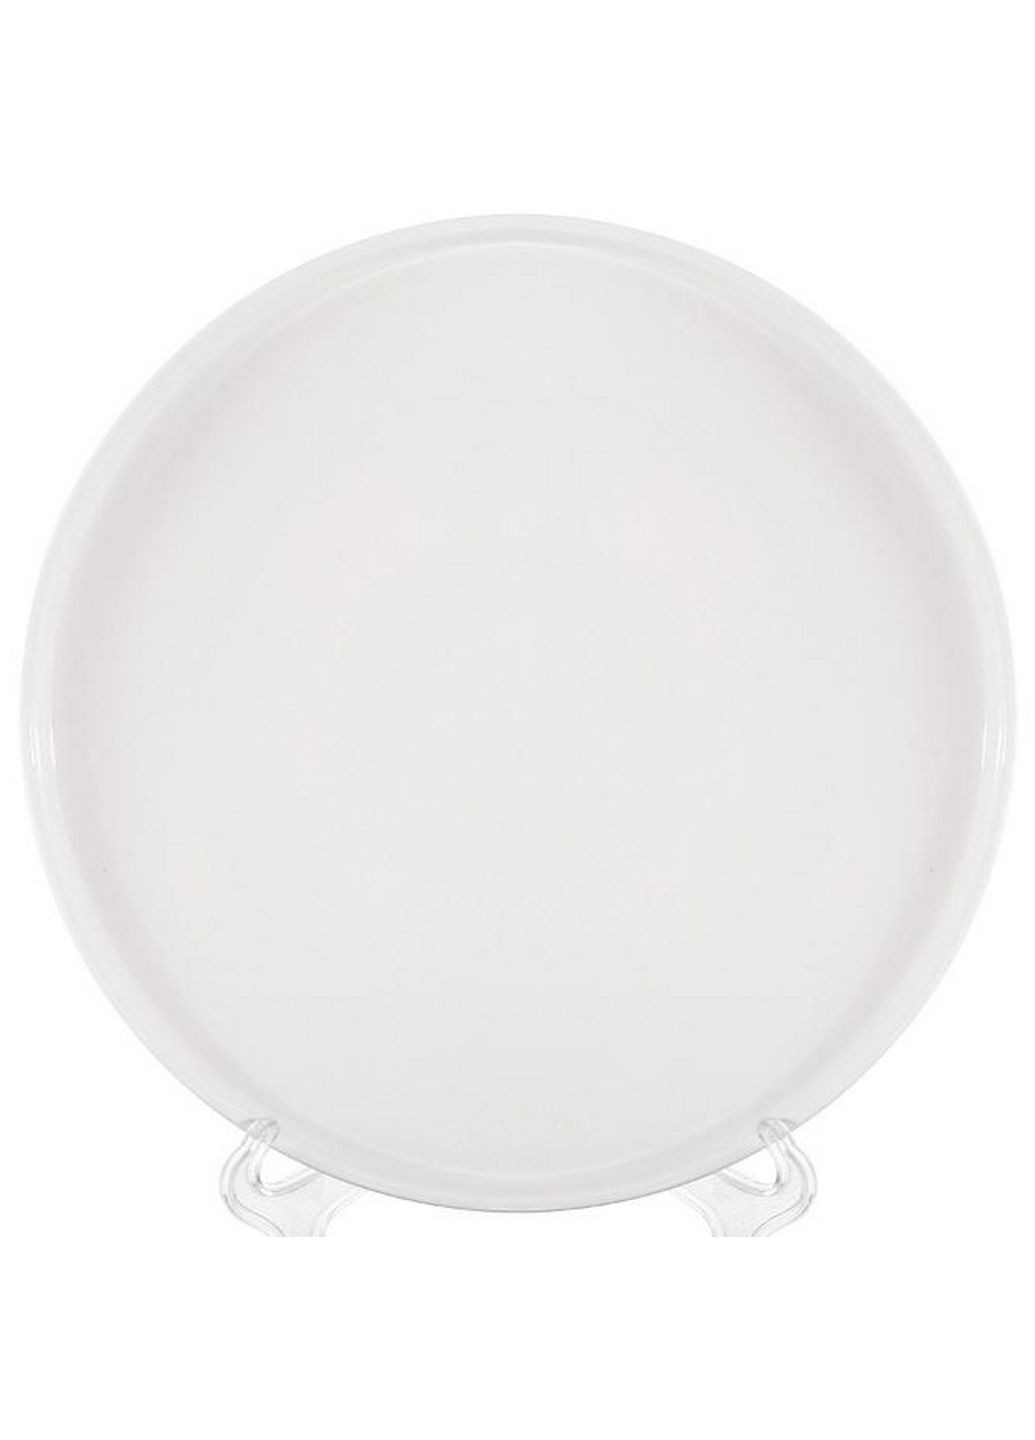 Тарелка обеденная white city, набор 2 тарелки, фарфор Bona (282585966)